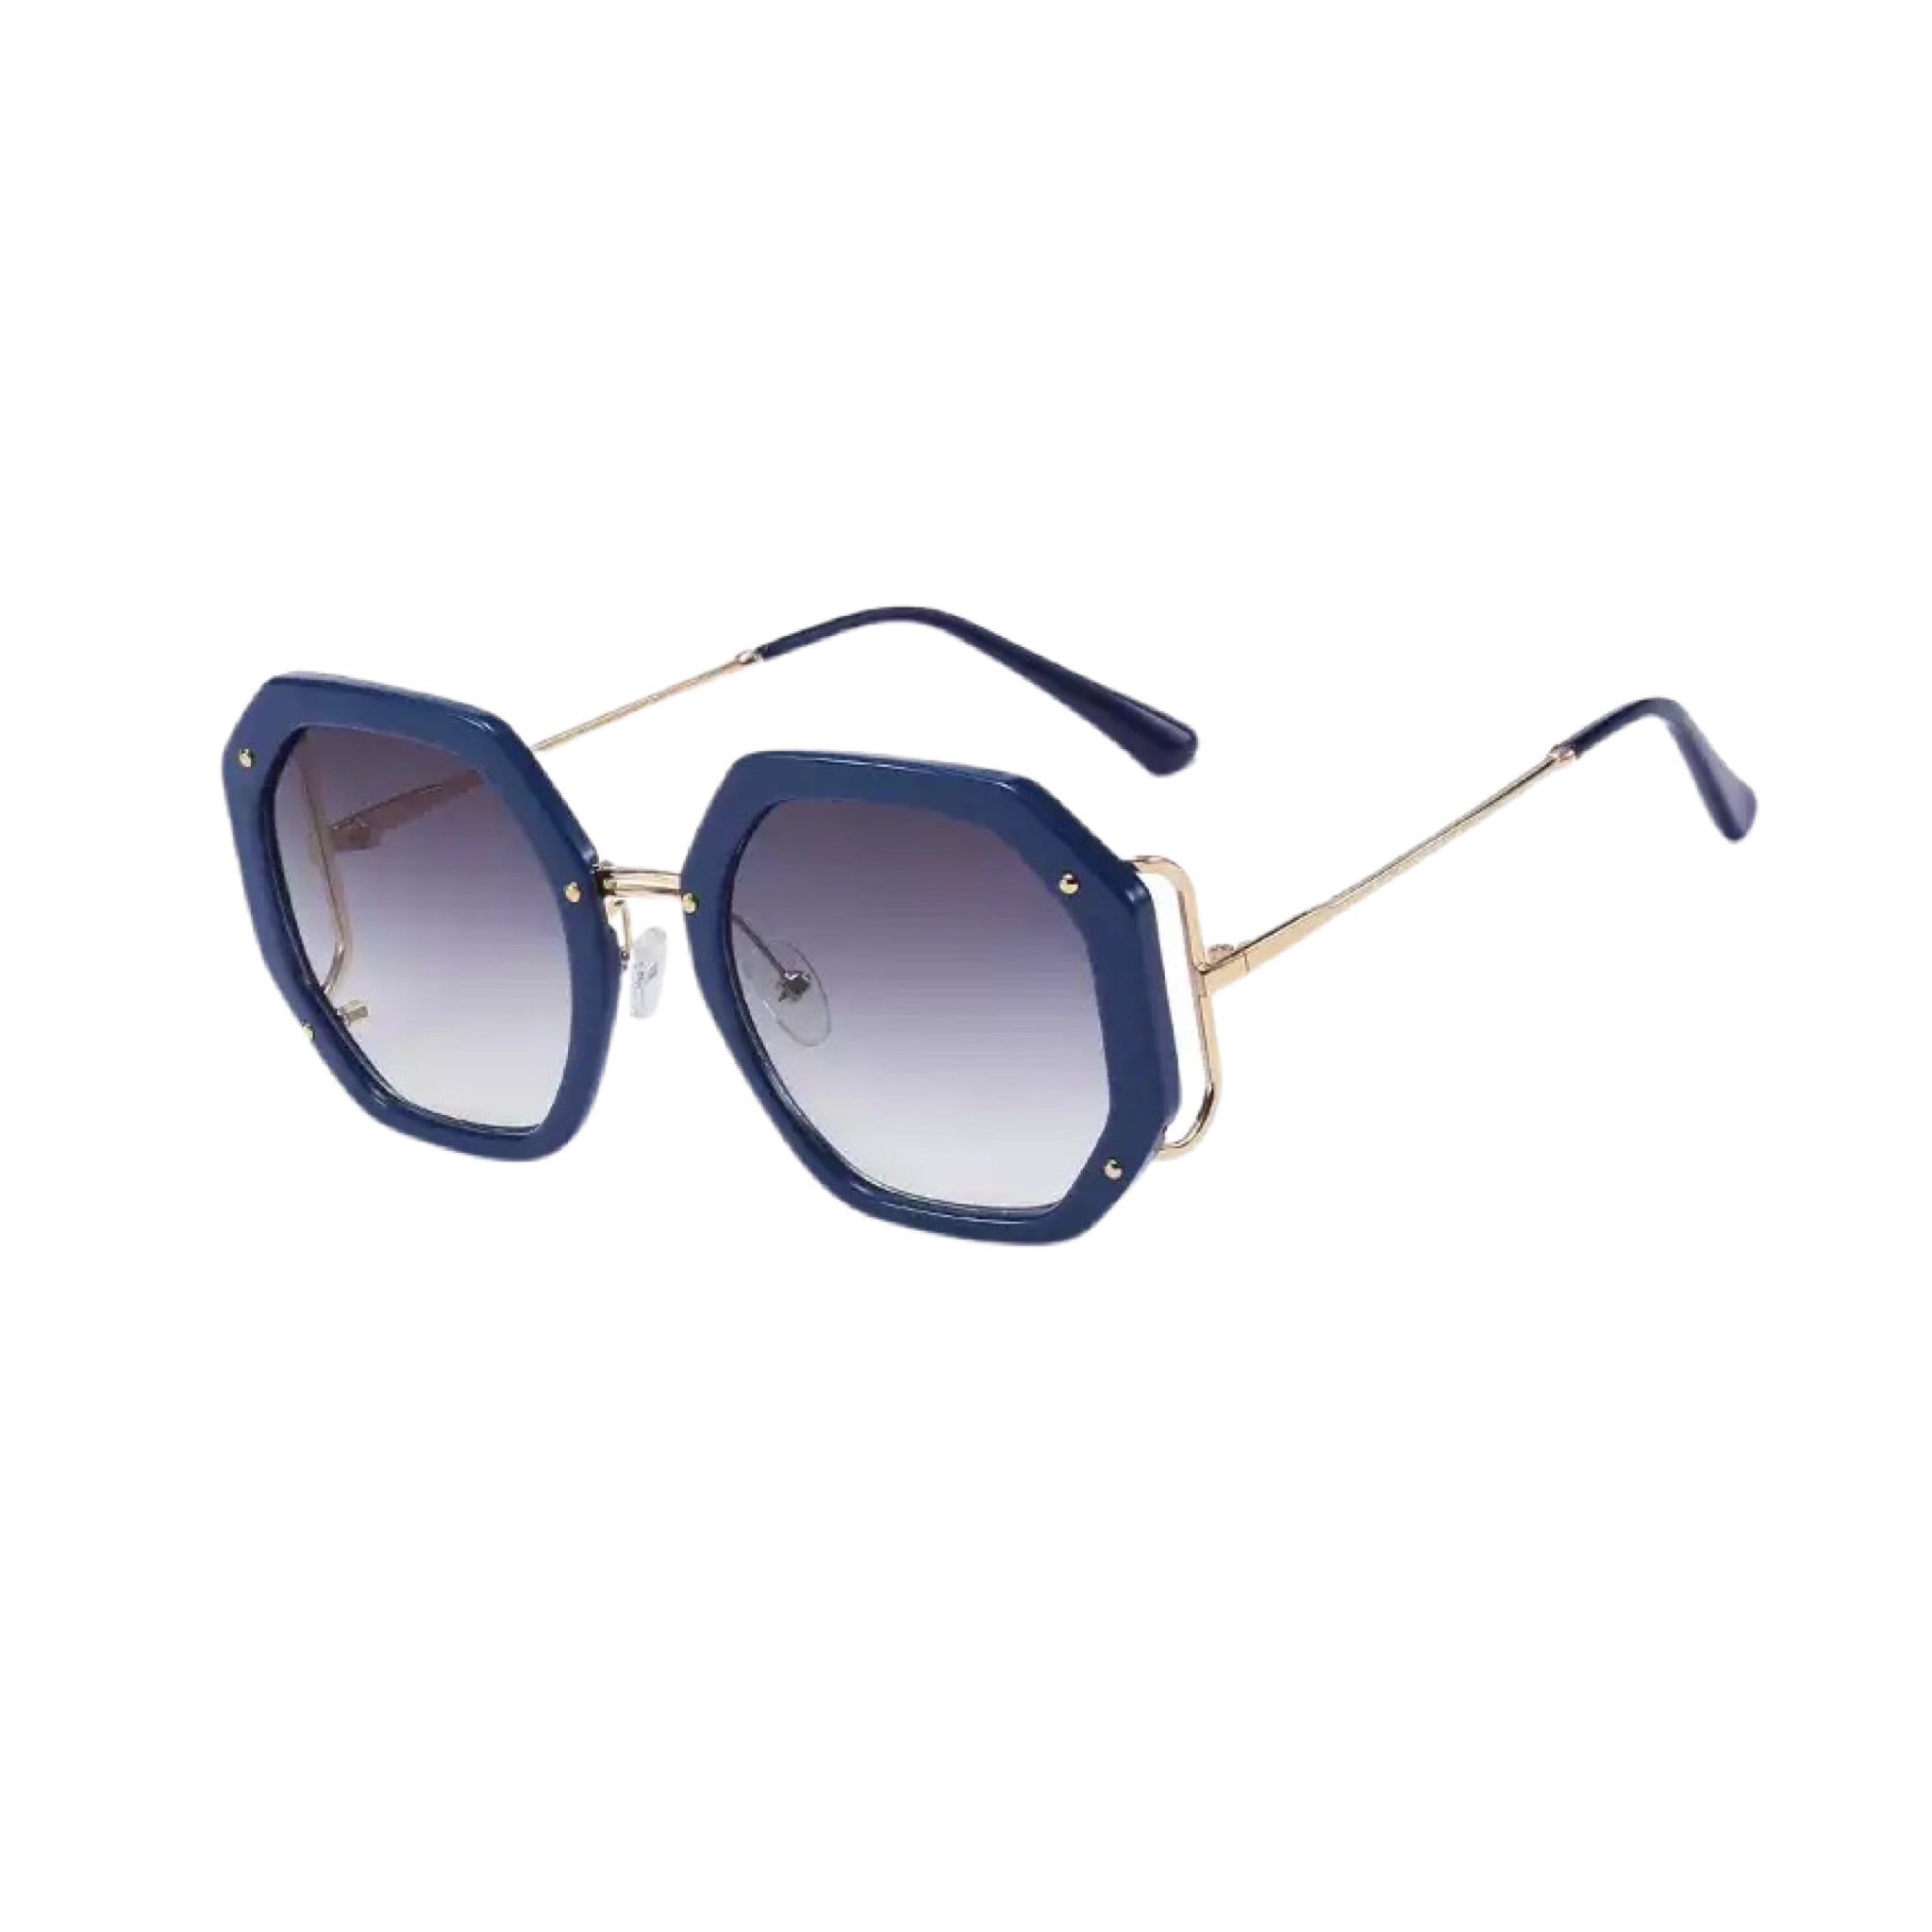 GOLDxTEAL blue octagon shaped sunglasses. Stylish over sized sunglasses.